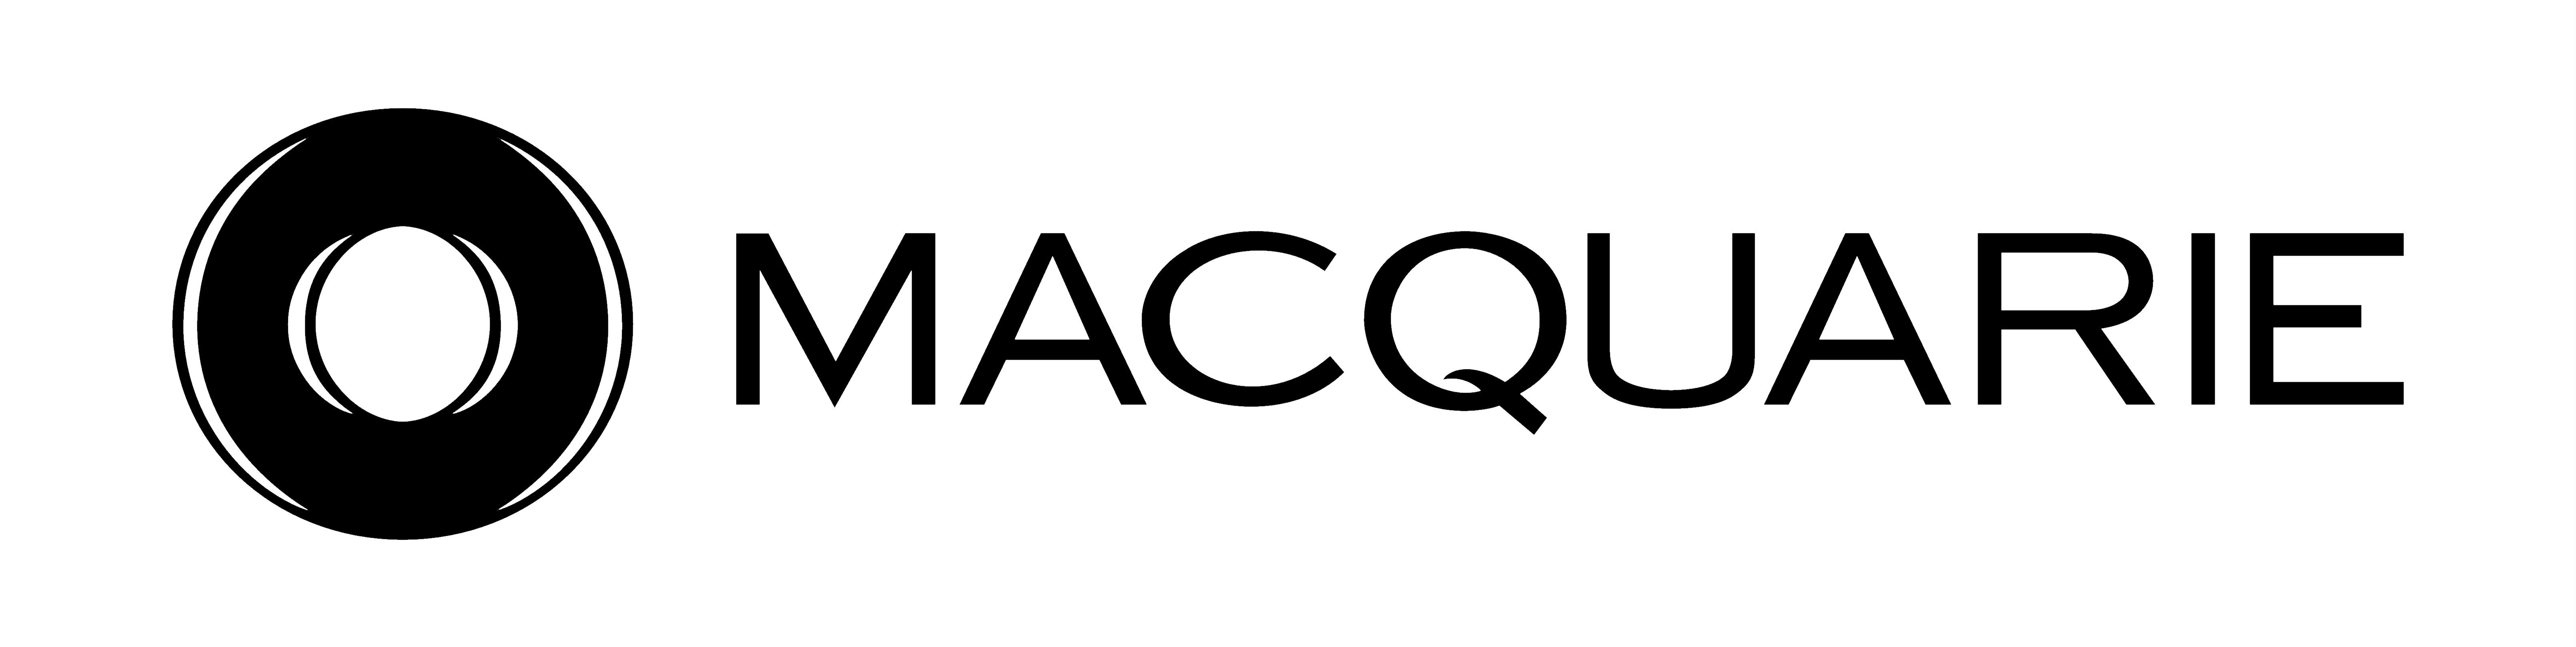 Macquarie logo - Macquarie Lo